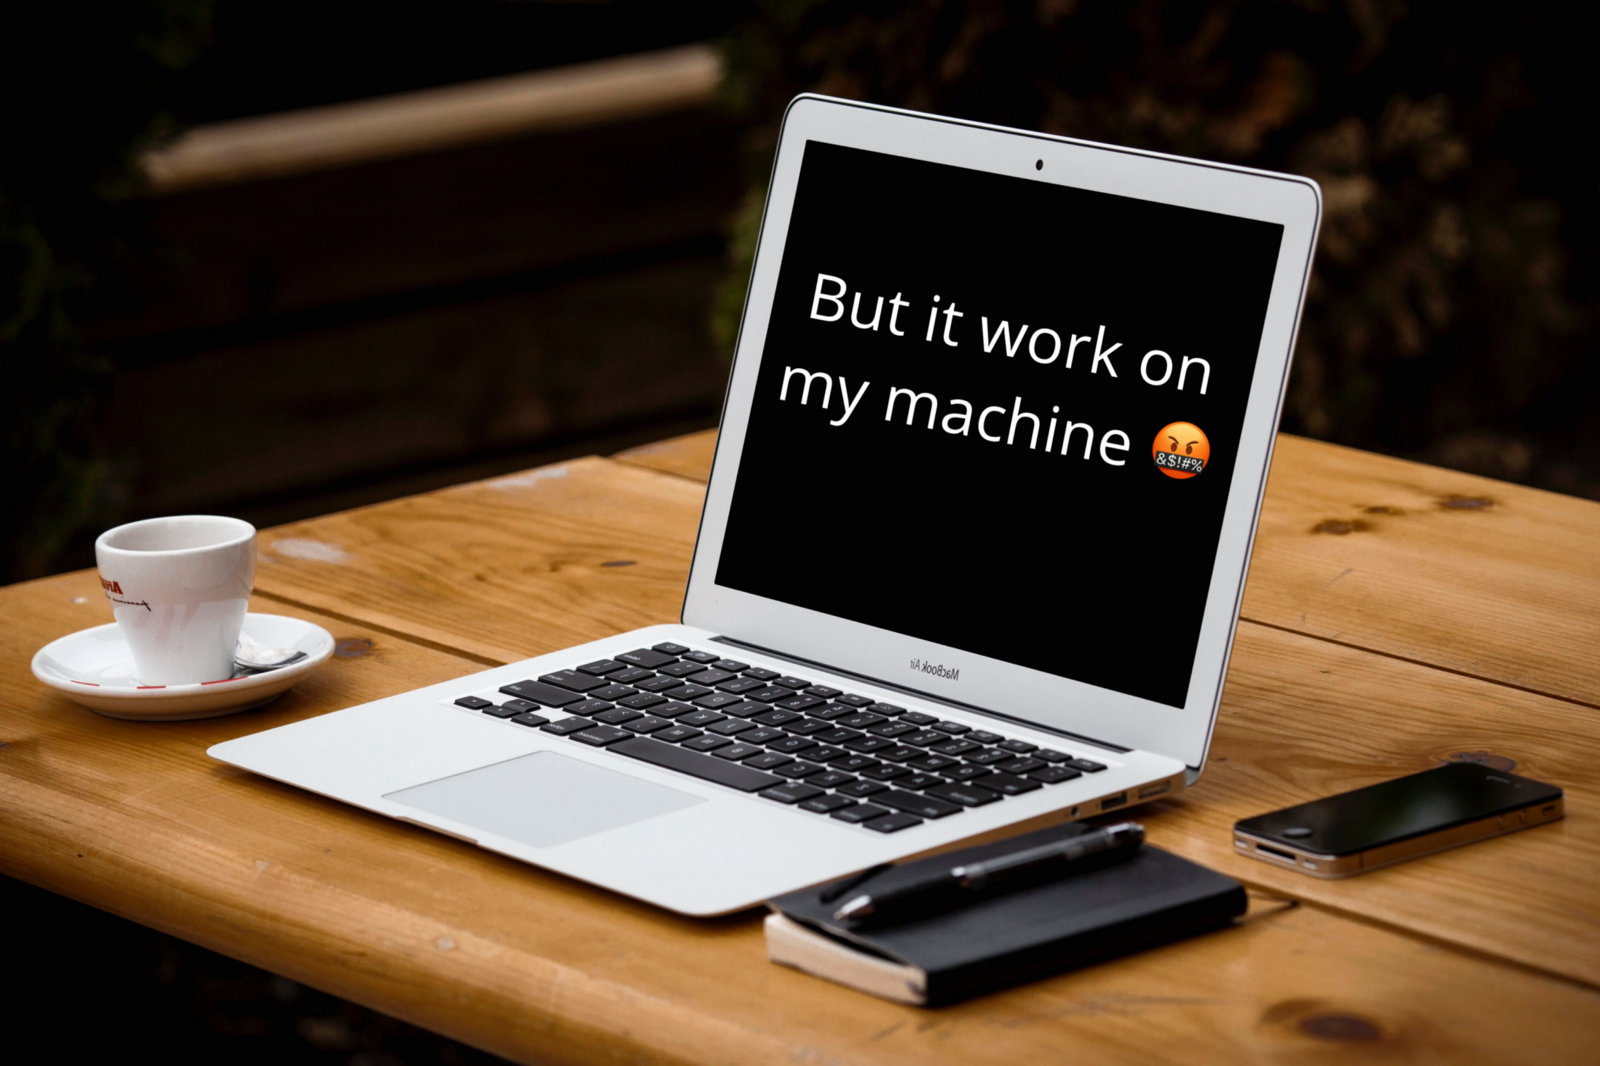 But, it work on my machine